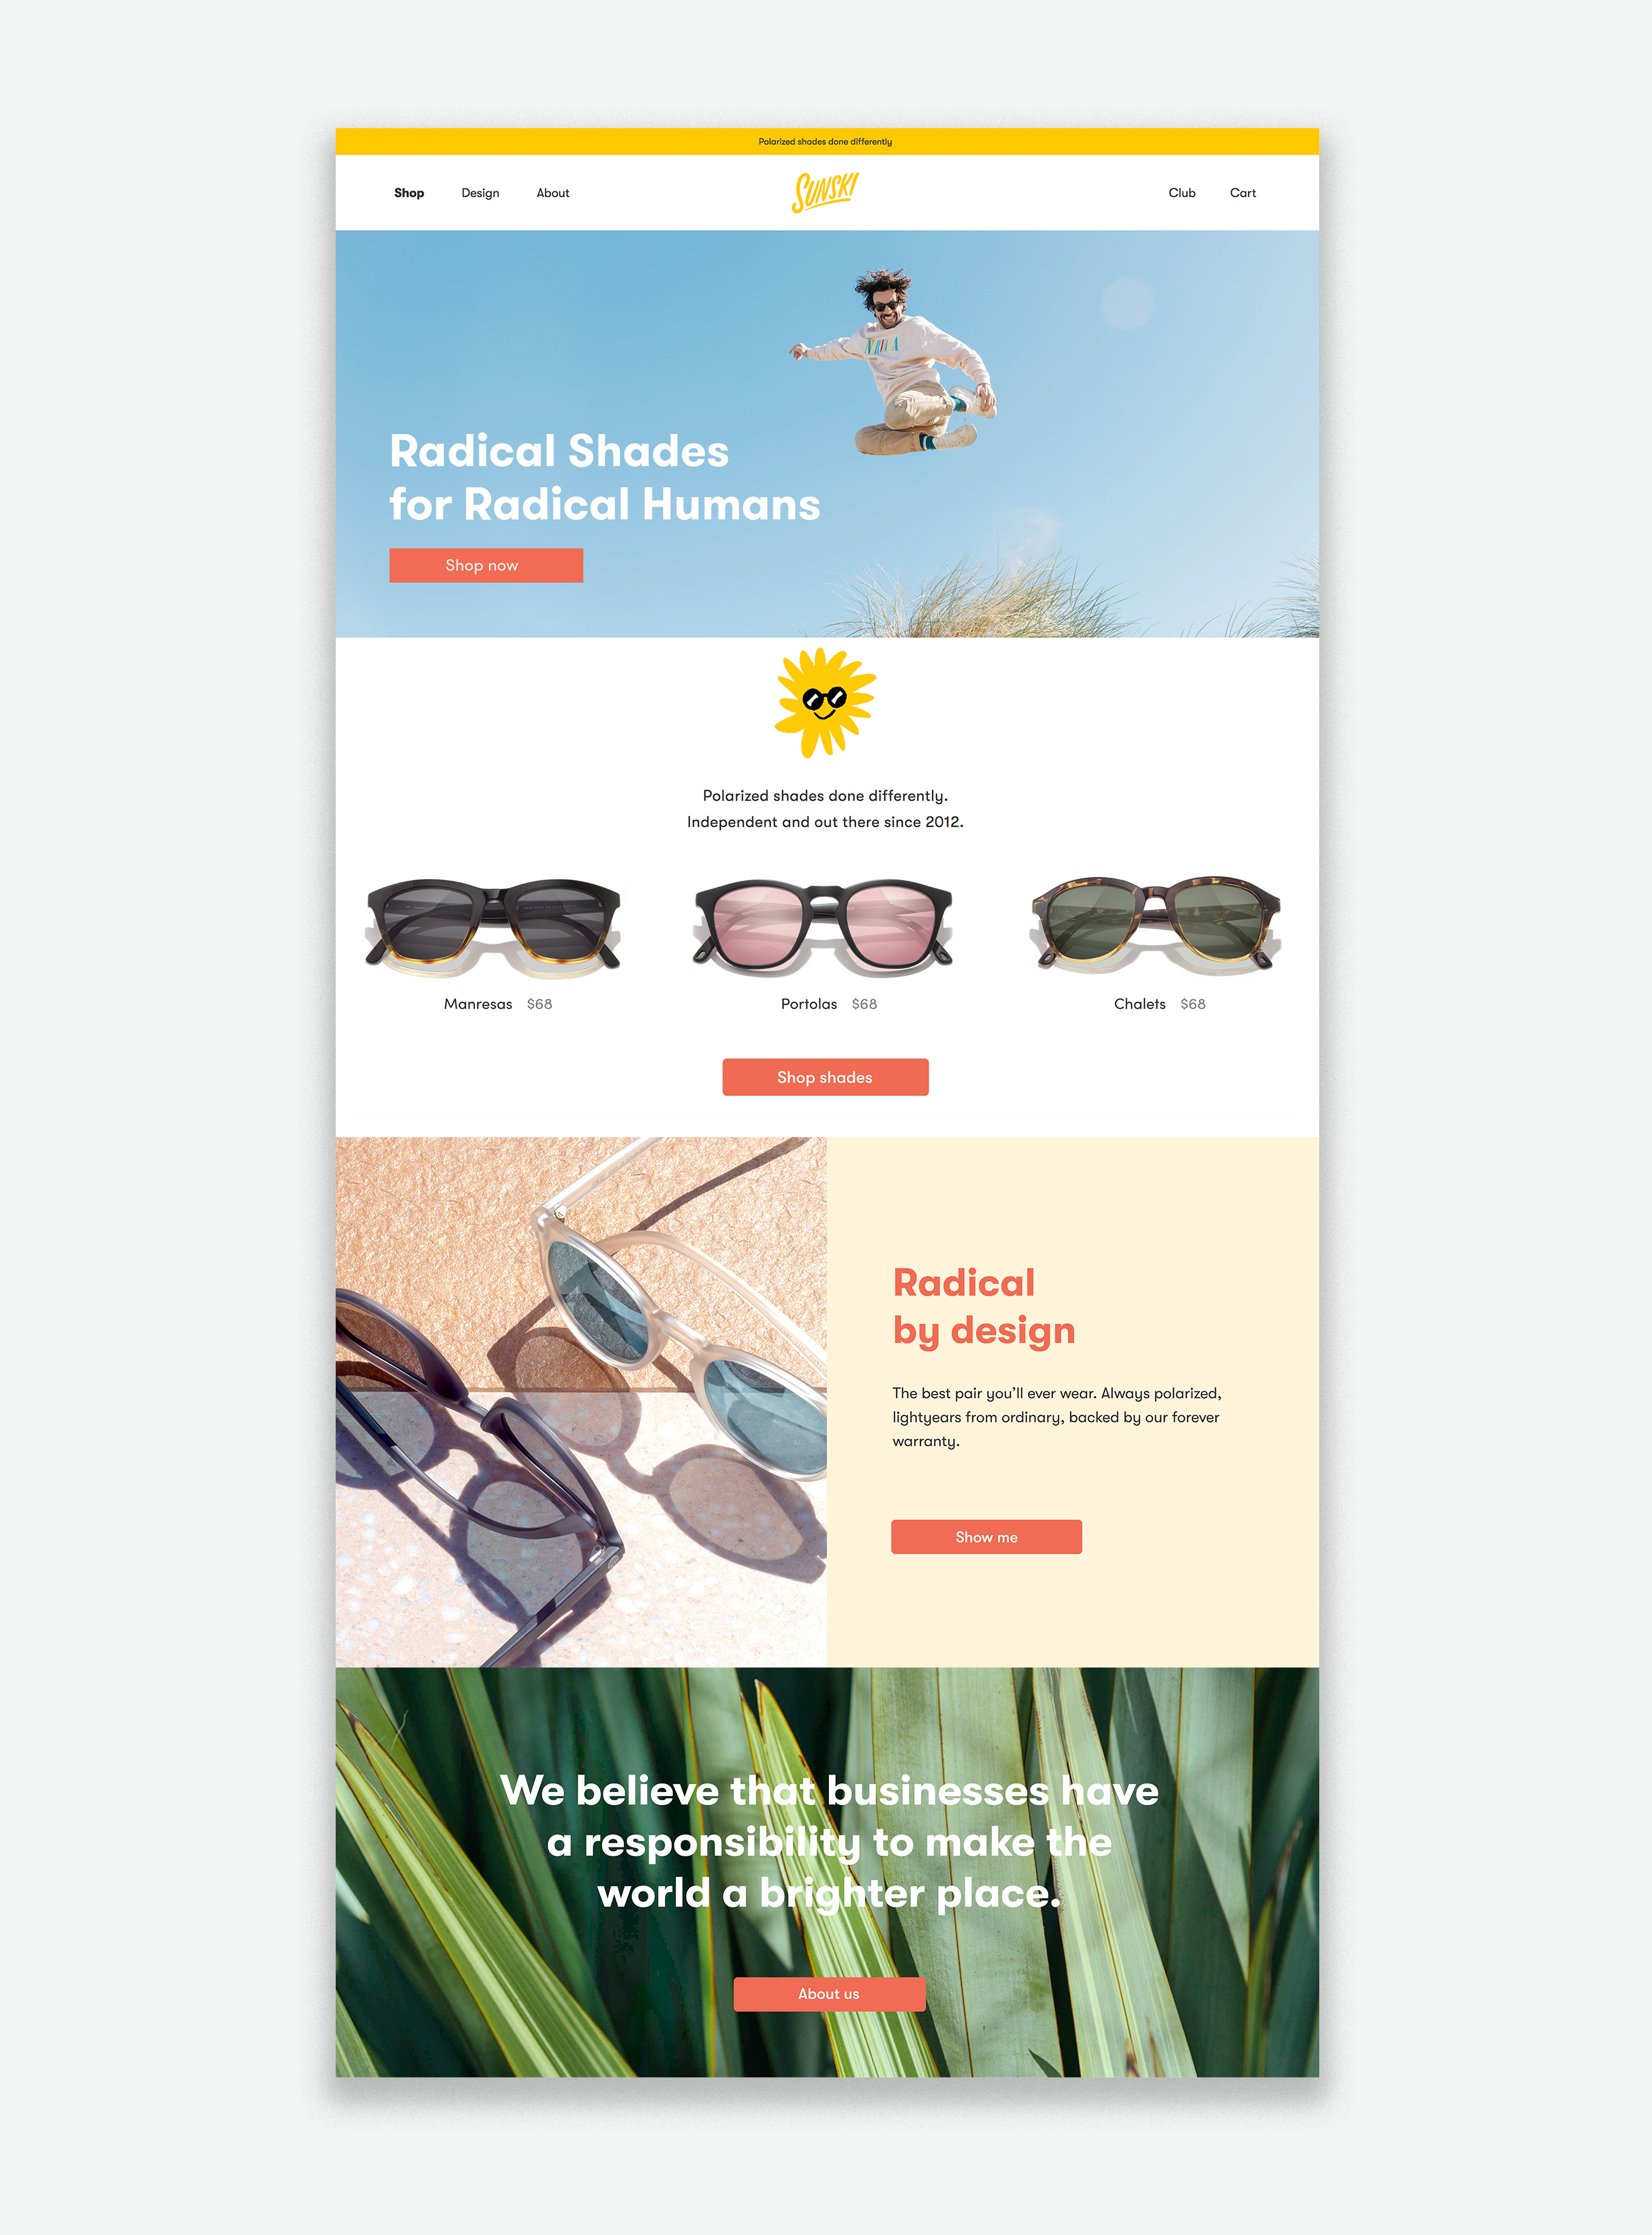 Polarized Sunglasses – Creative Group